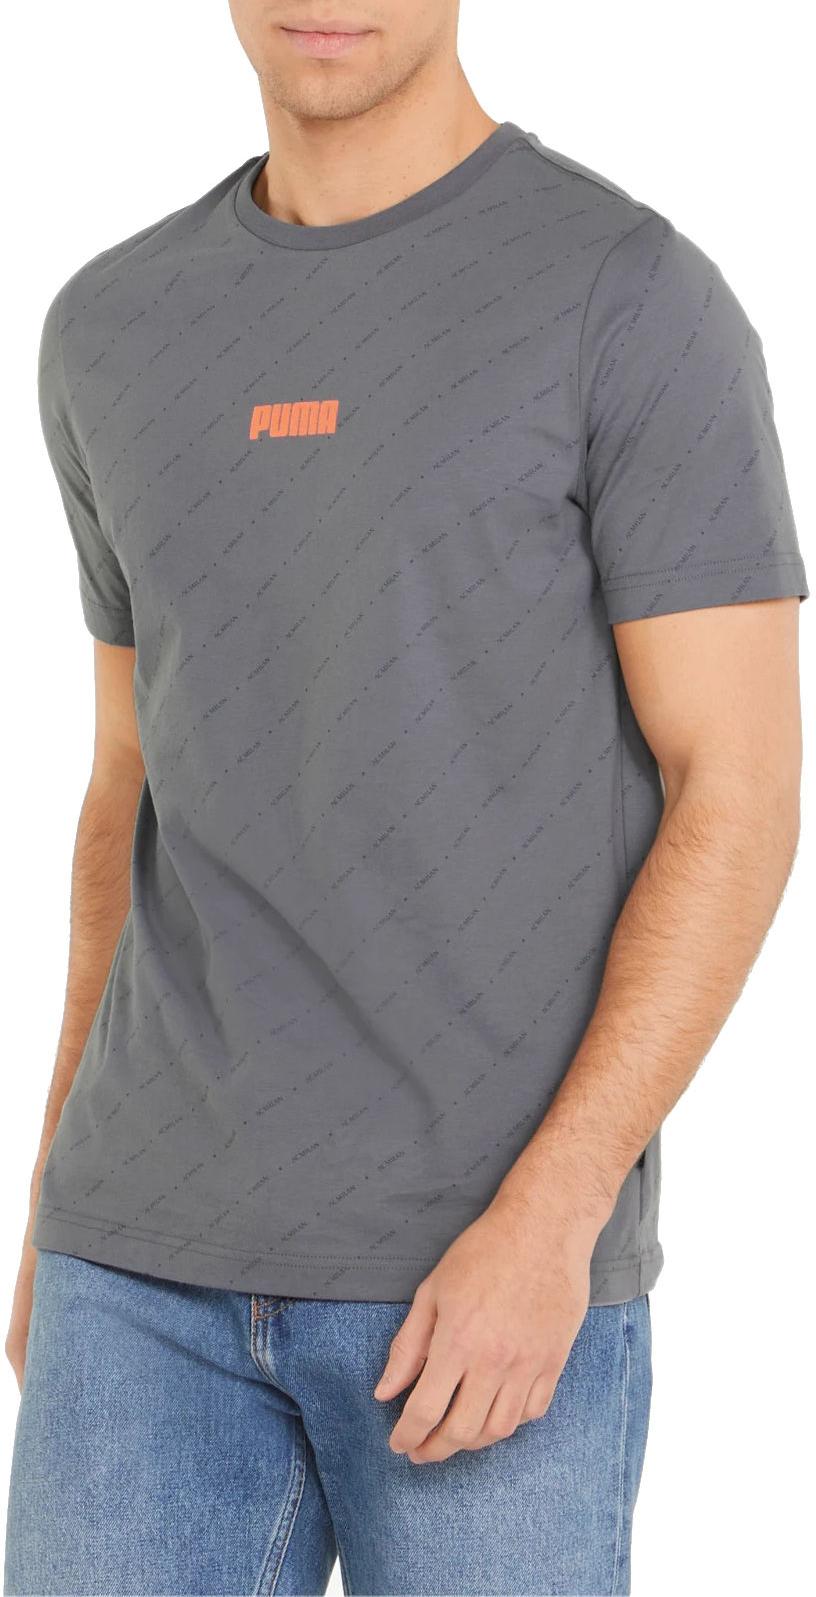 T-shirt Puma ACM FtblLegacy Tee